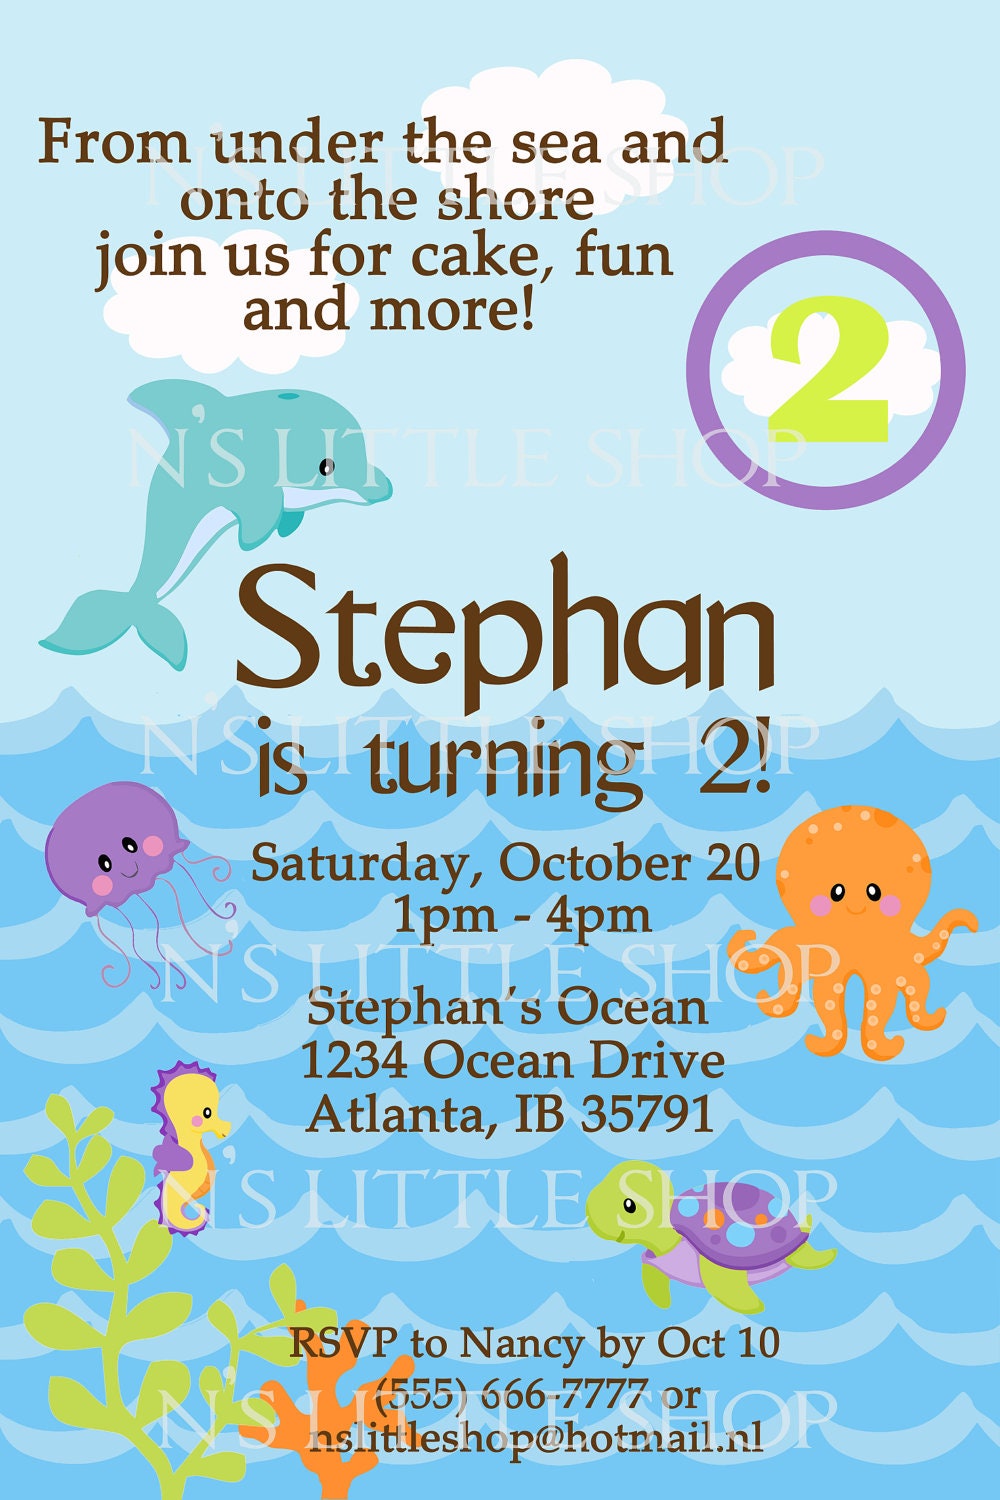 Under the Sea birthday invitation card / by nslittleshop on Etsy